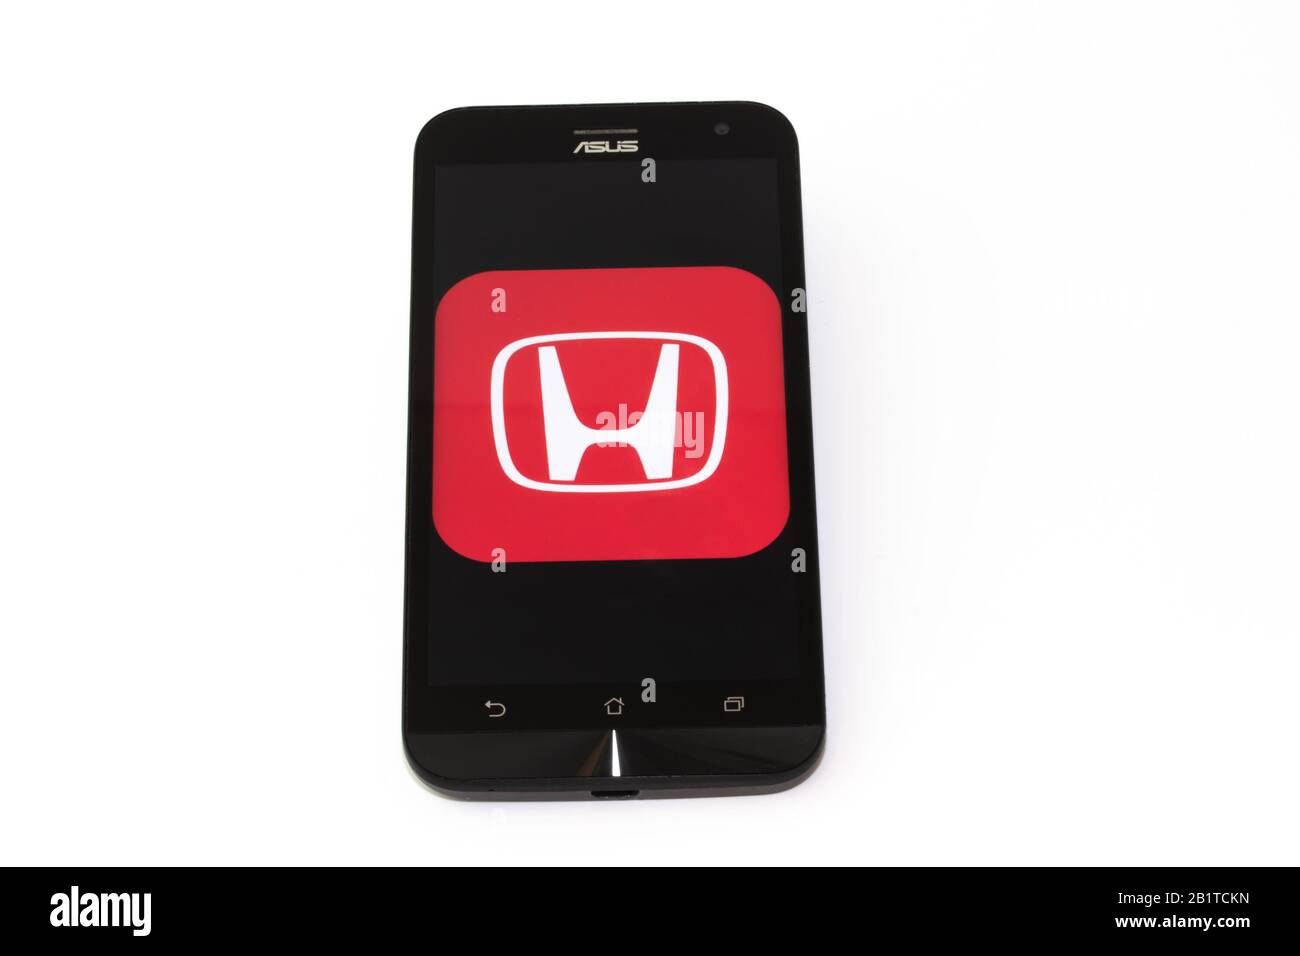 Kouvola, Finland - 23 January 2020: Honda app logo on the screen of smartphone Asus Stock Photo